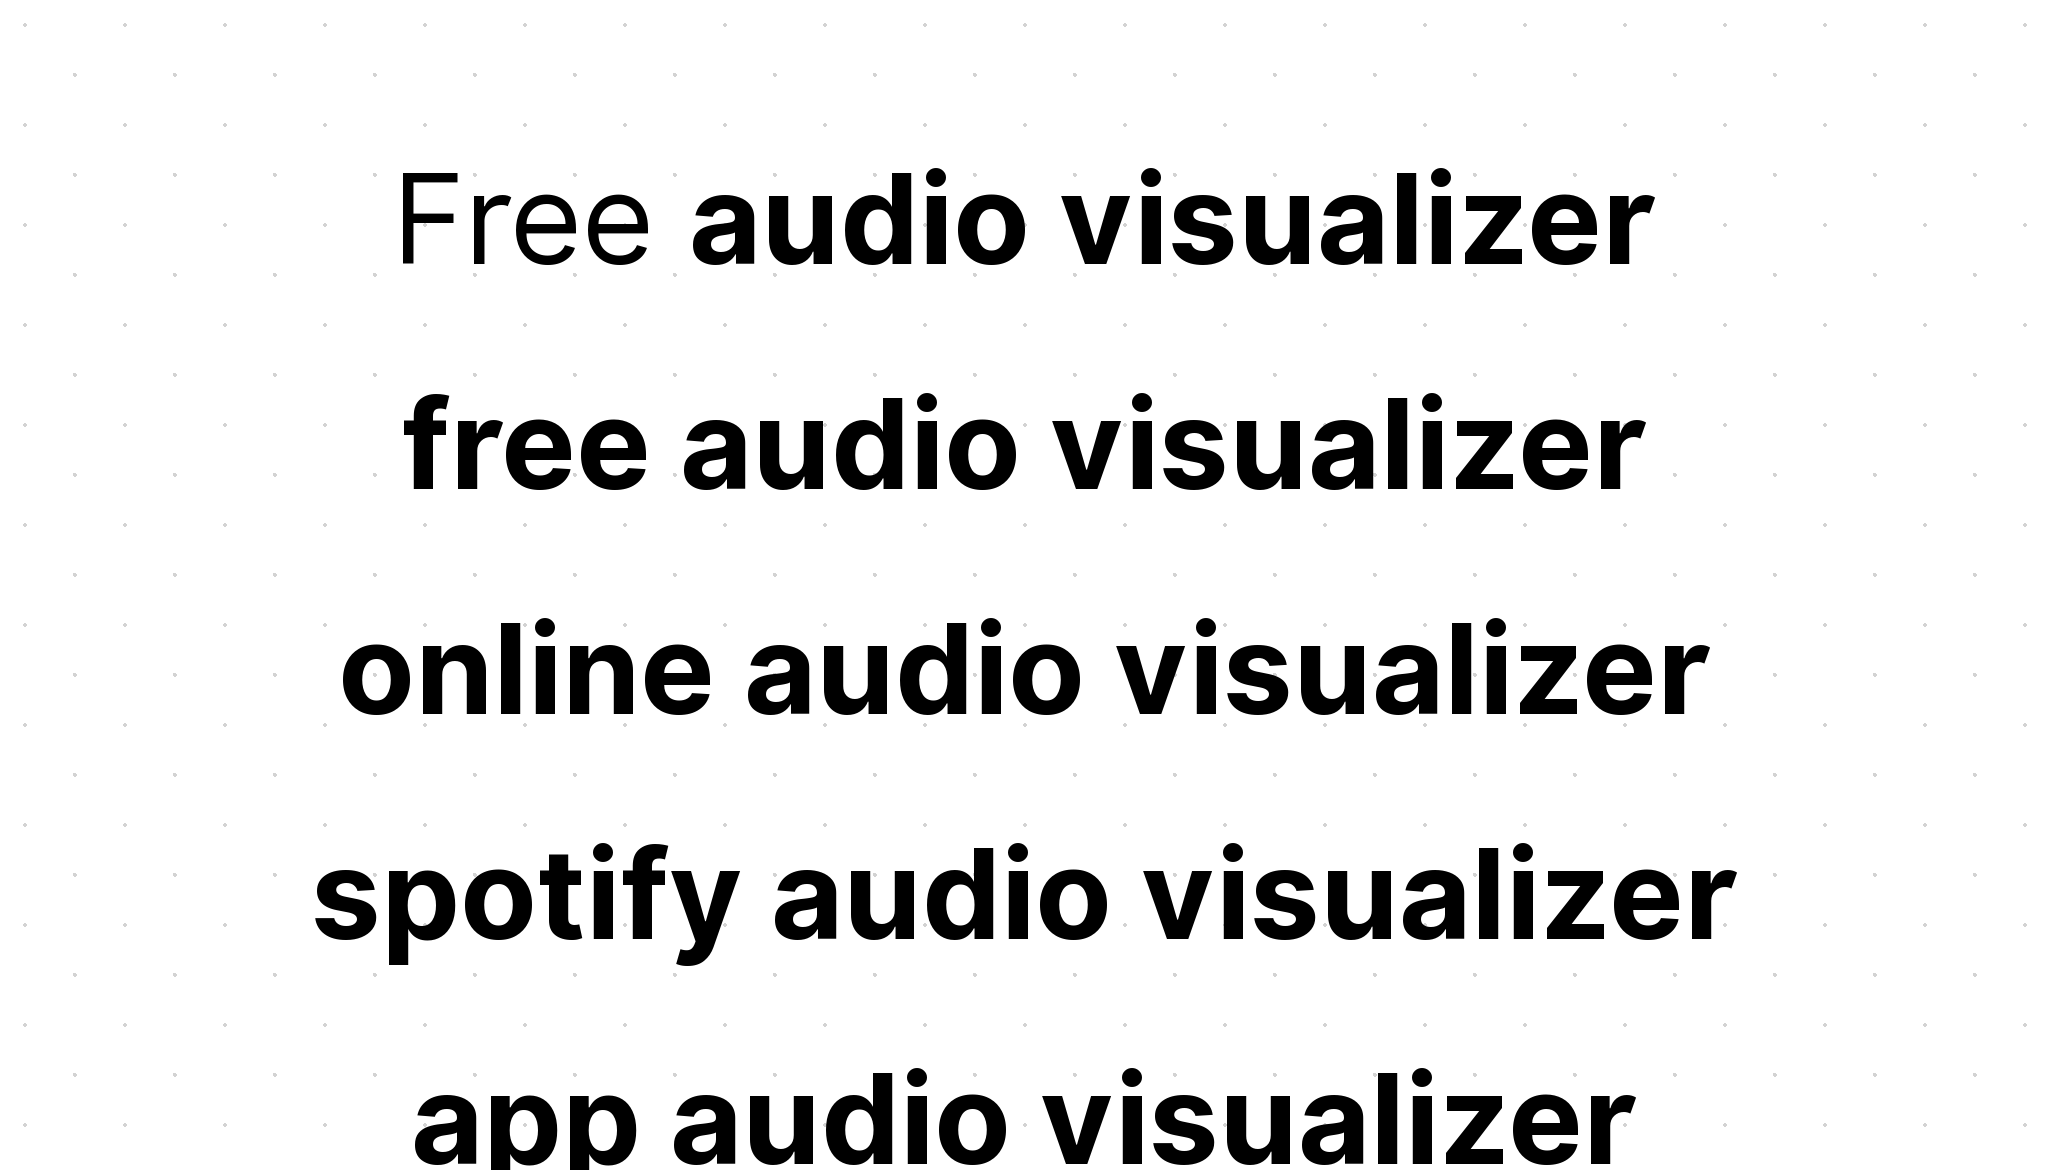 Audio Visualizer Free Audio Visualizer Online Audio Visualizer Spotify Audio Visualizer App Audio Visualizer Roblox Templates Velosofy - audio visualizer roblox roblox audio visualizer